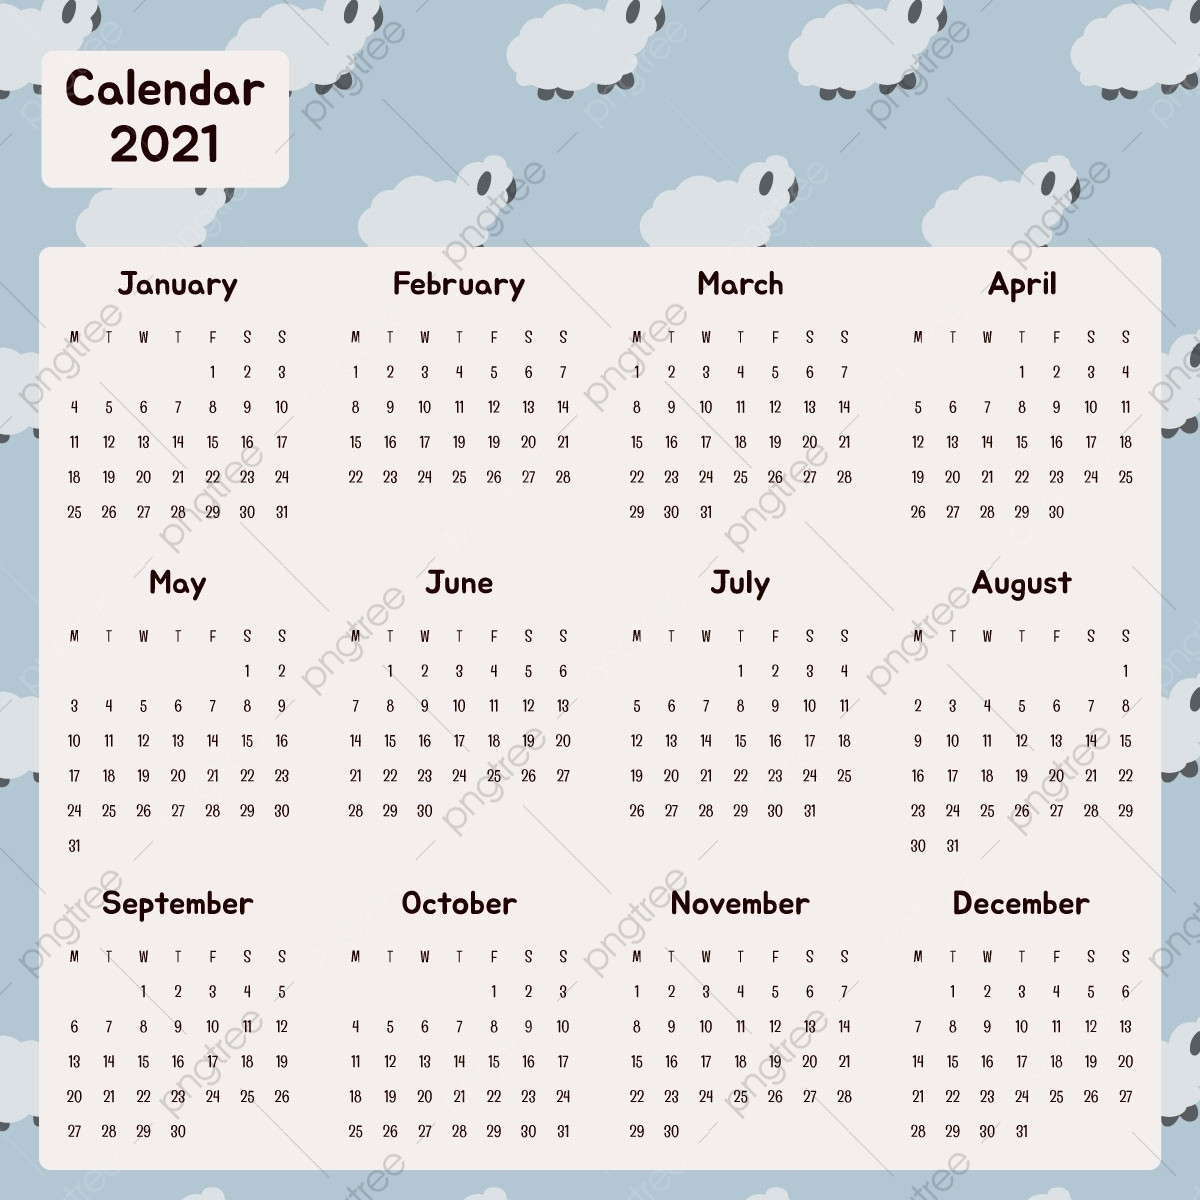 Catch Calendar 2021 For Fill Up | Best Calendar Example-Fill In Calaendar For 2021